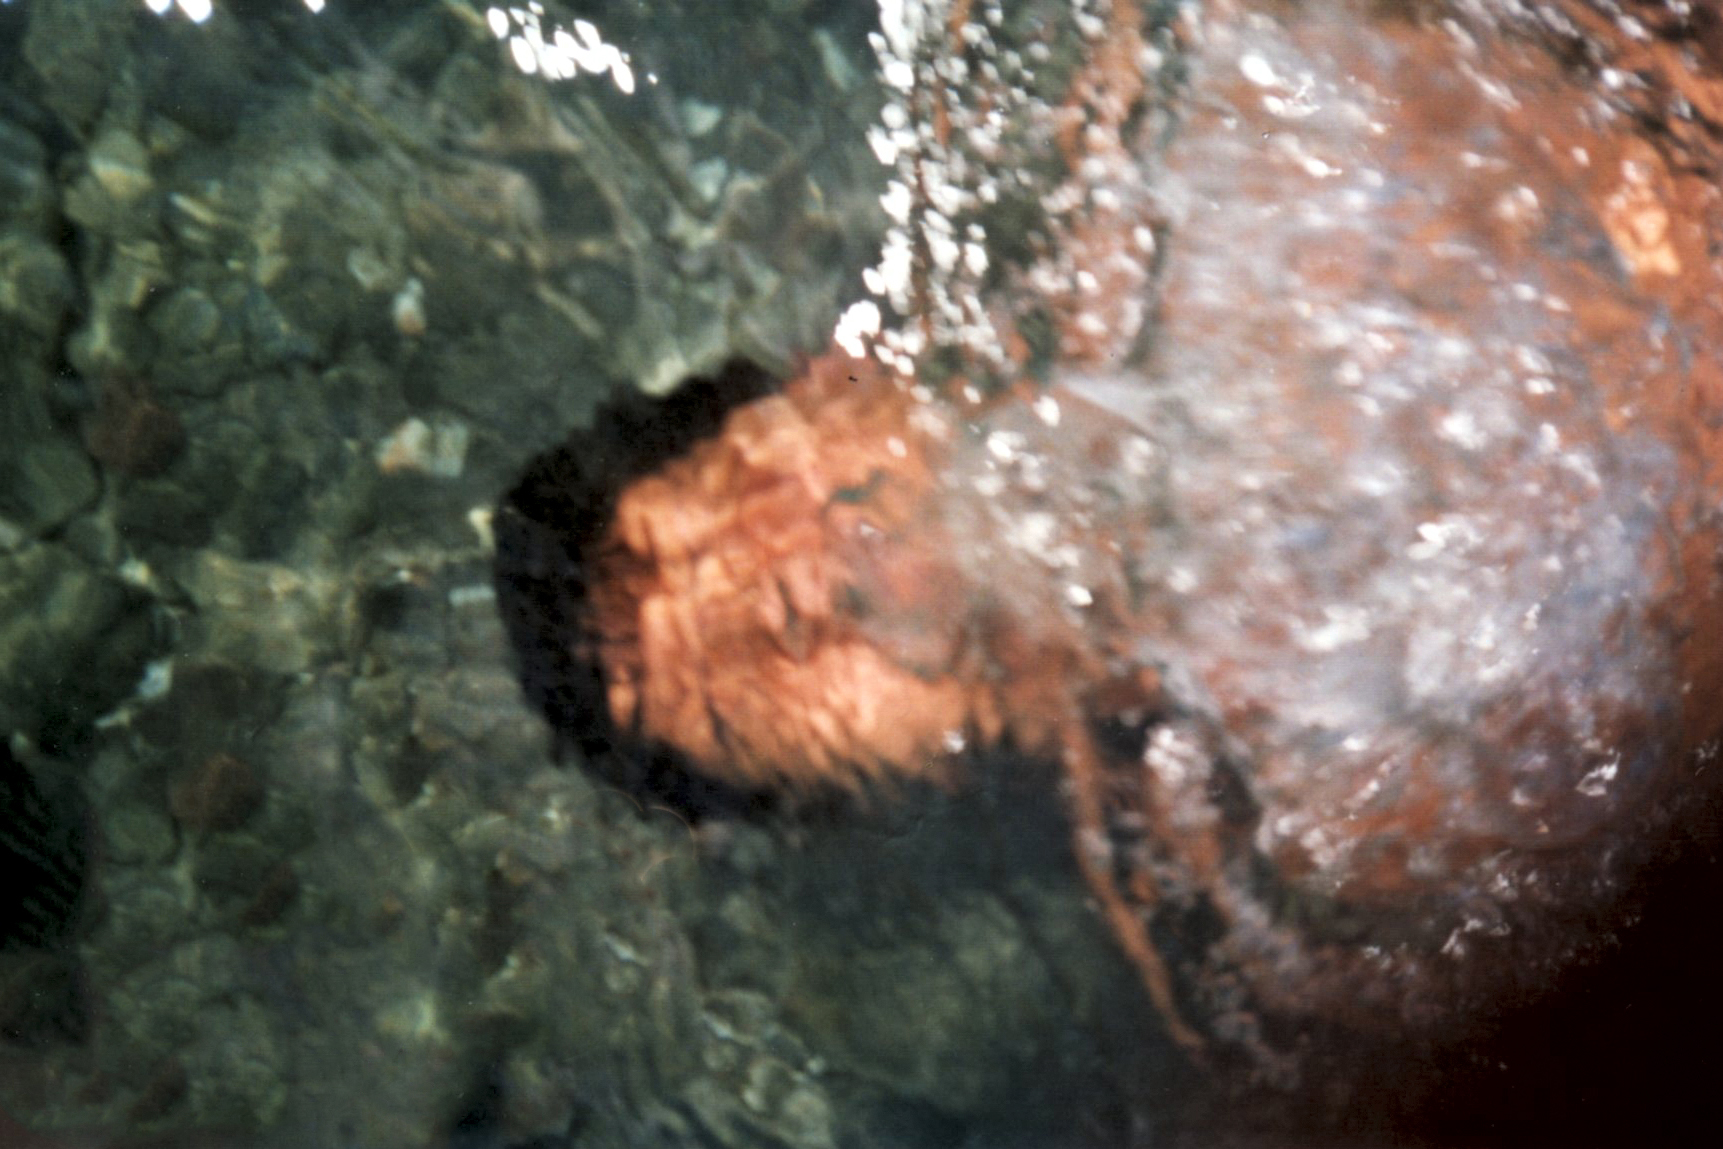 person swimming underwater